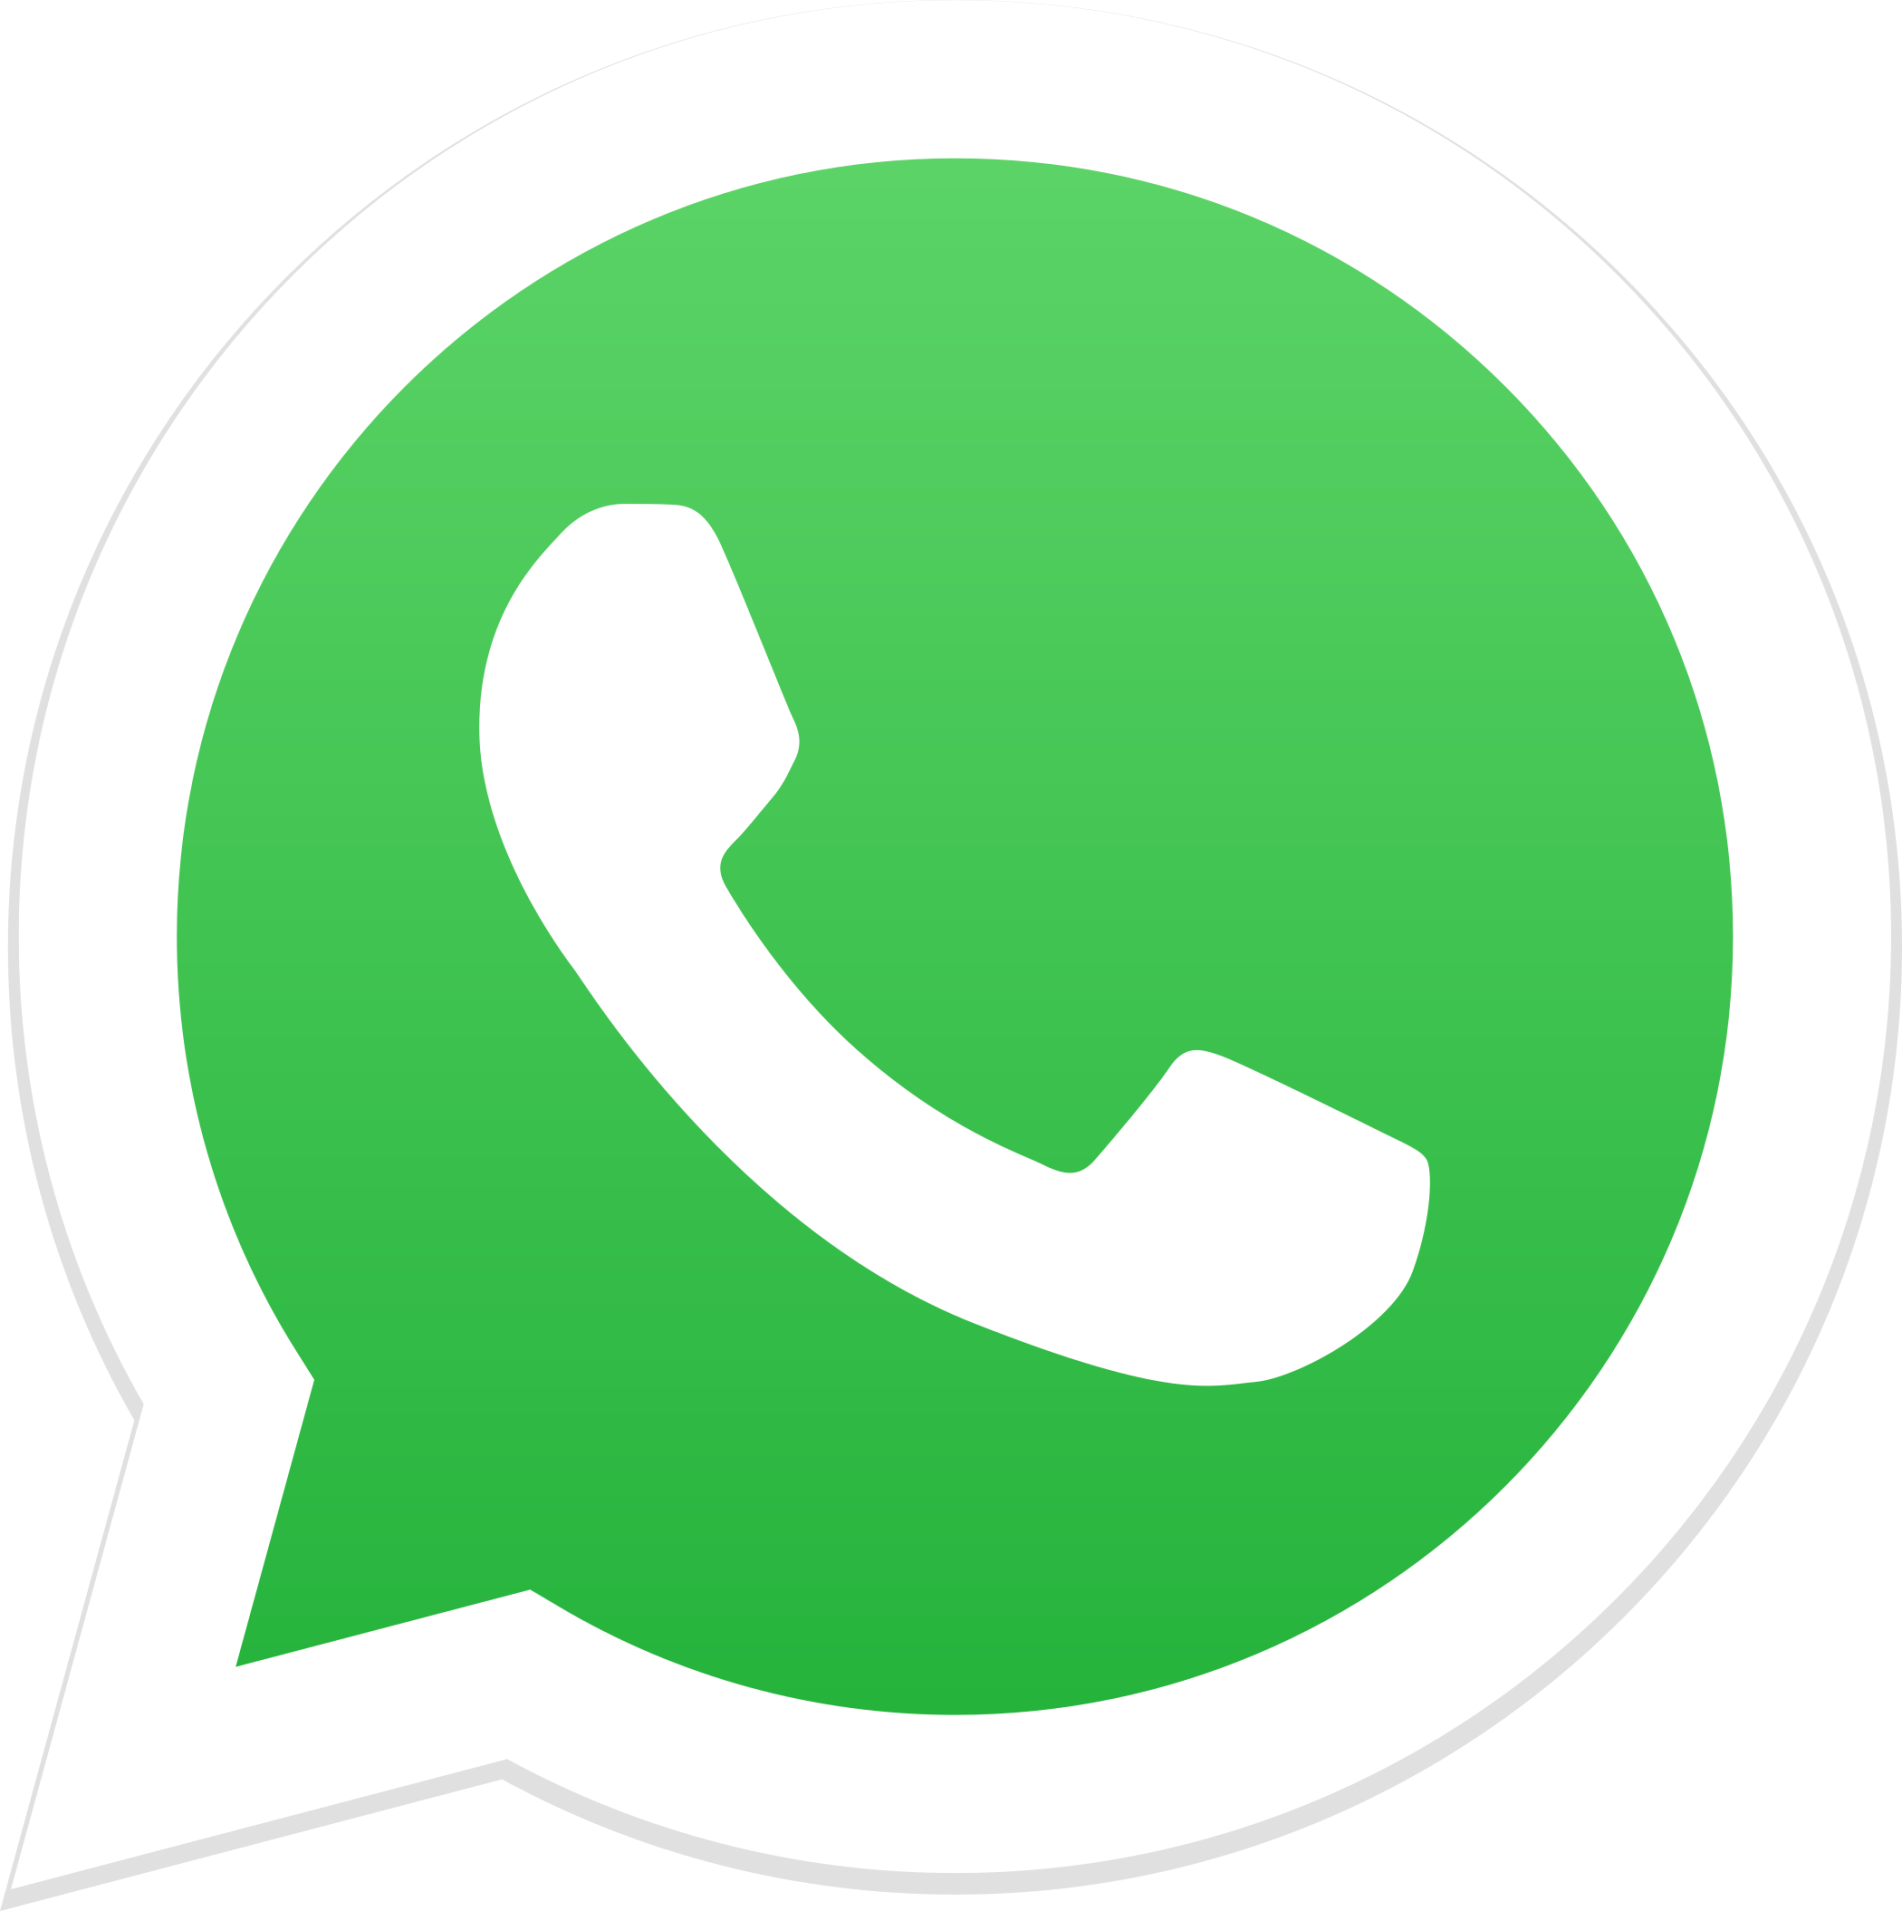 whatsapp-icone-1